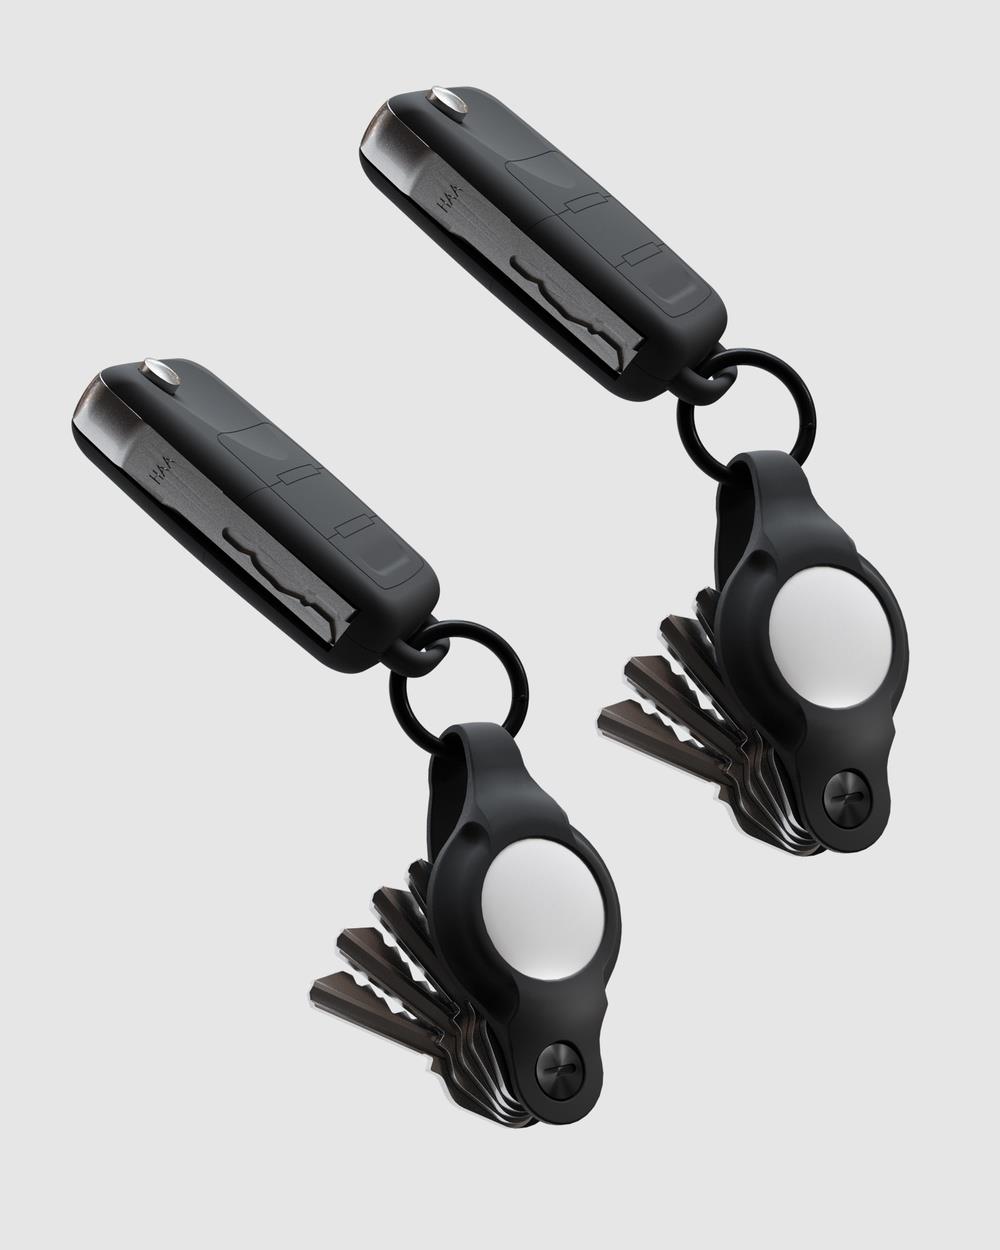 KeySmart - KeySmart Air Flex Compact Key Holder for Apple AirTag, Slim and Pocket Friendly (Up to 5 Keys) Black 2 Pack - Key Rings (N/A) KeySmart Air Flex - Compact Key Holder for Apple AirTag, Slim and Pocket Friendly (Up to 5 Keys) - Black - 2 Pack